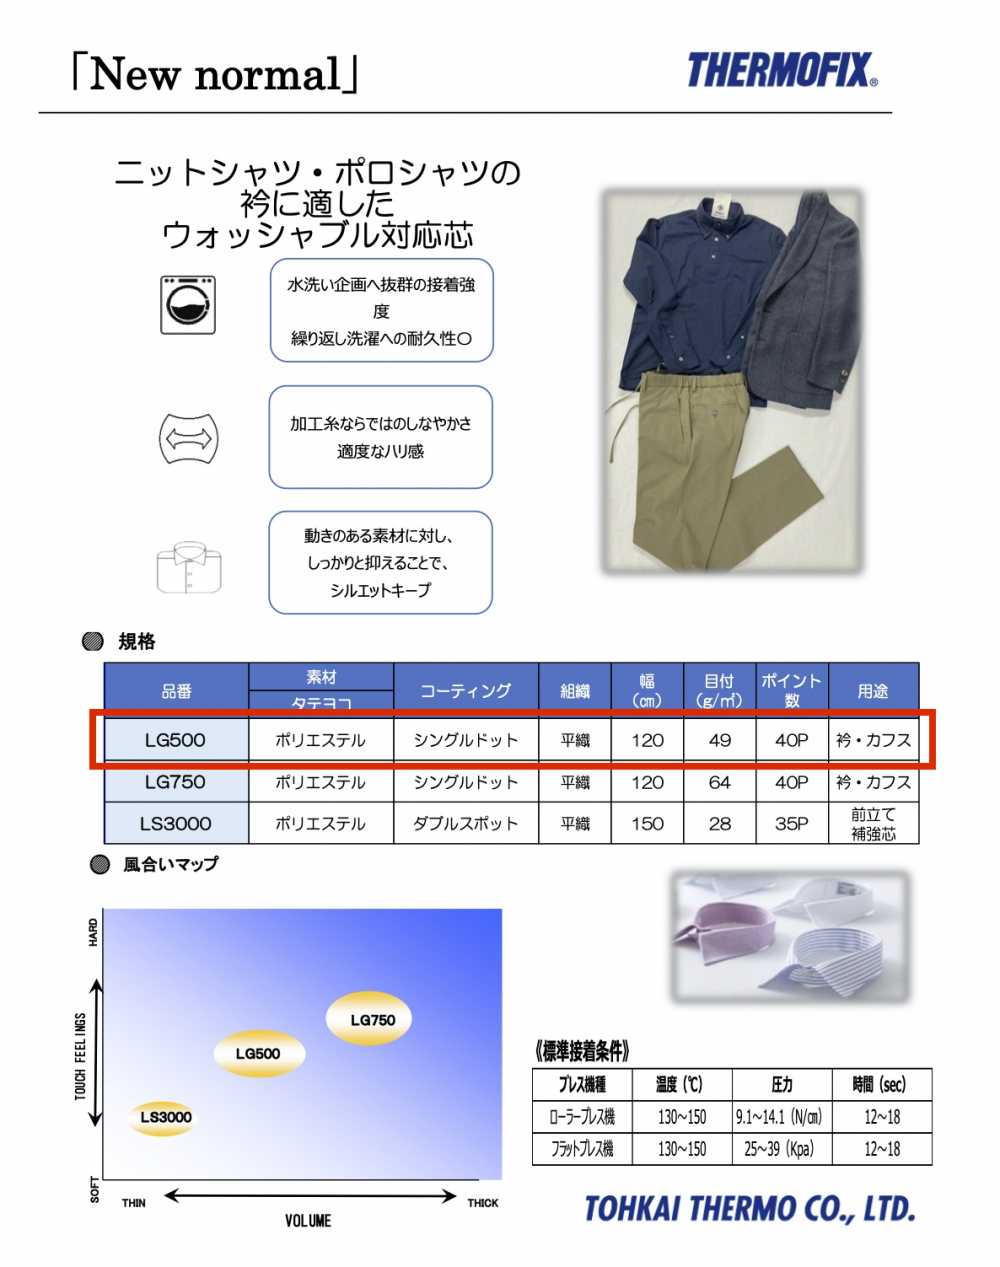 LG500 사모 픽스 ® [New Normal] LG 시리즈 셔츠 금천구 접착심지 Tohkai Thermo 도카이 써모(Thermo)